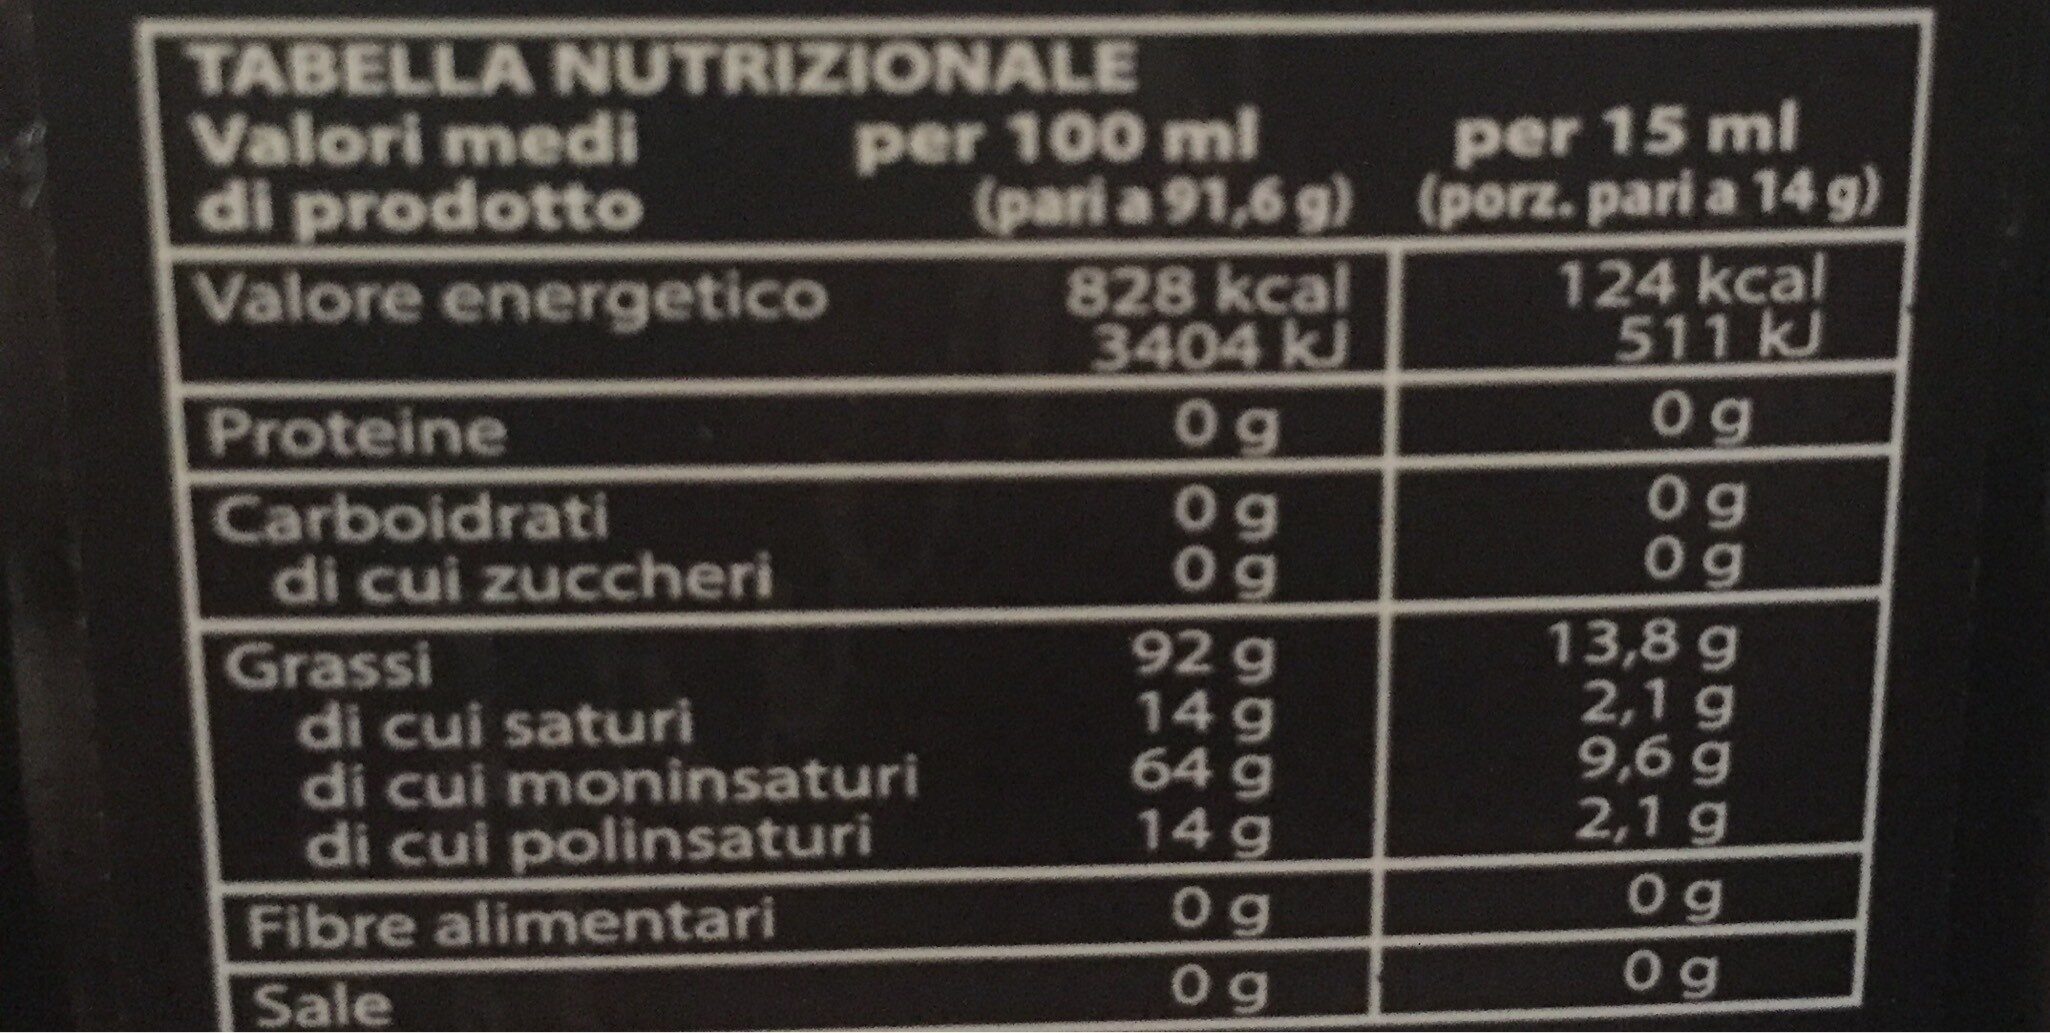 Huile extra vierge d'olive bruno viola - Tableau nutritionnel